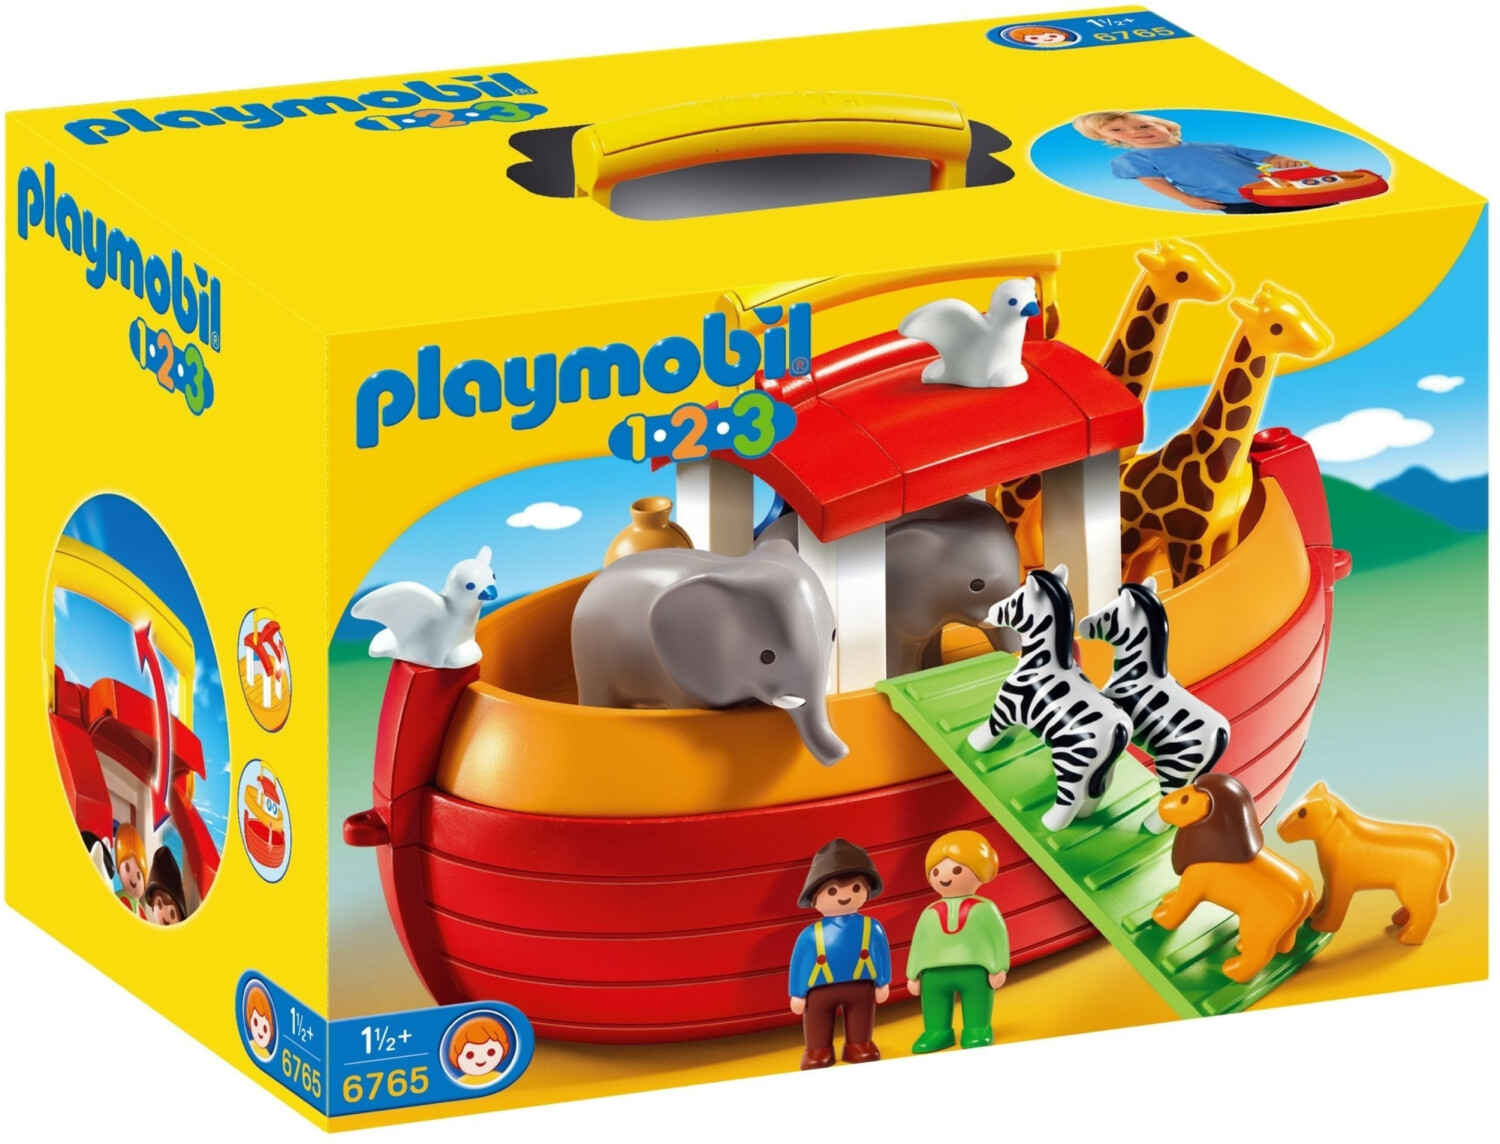 Ferme Transportable Playmobil 123 pas cher - Achat neuf et occasion